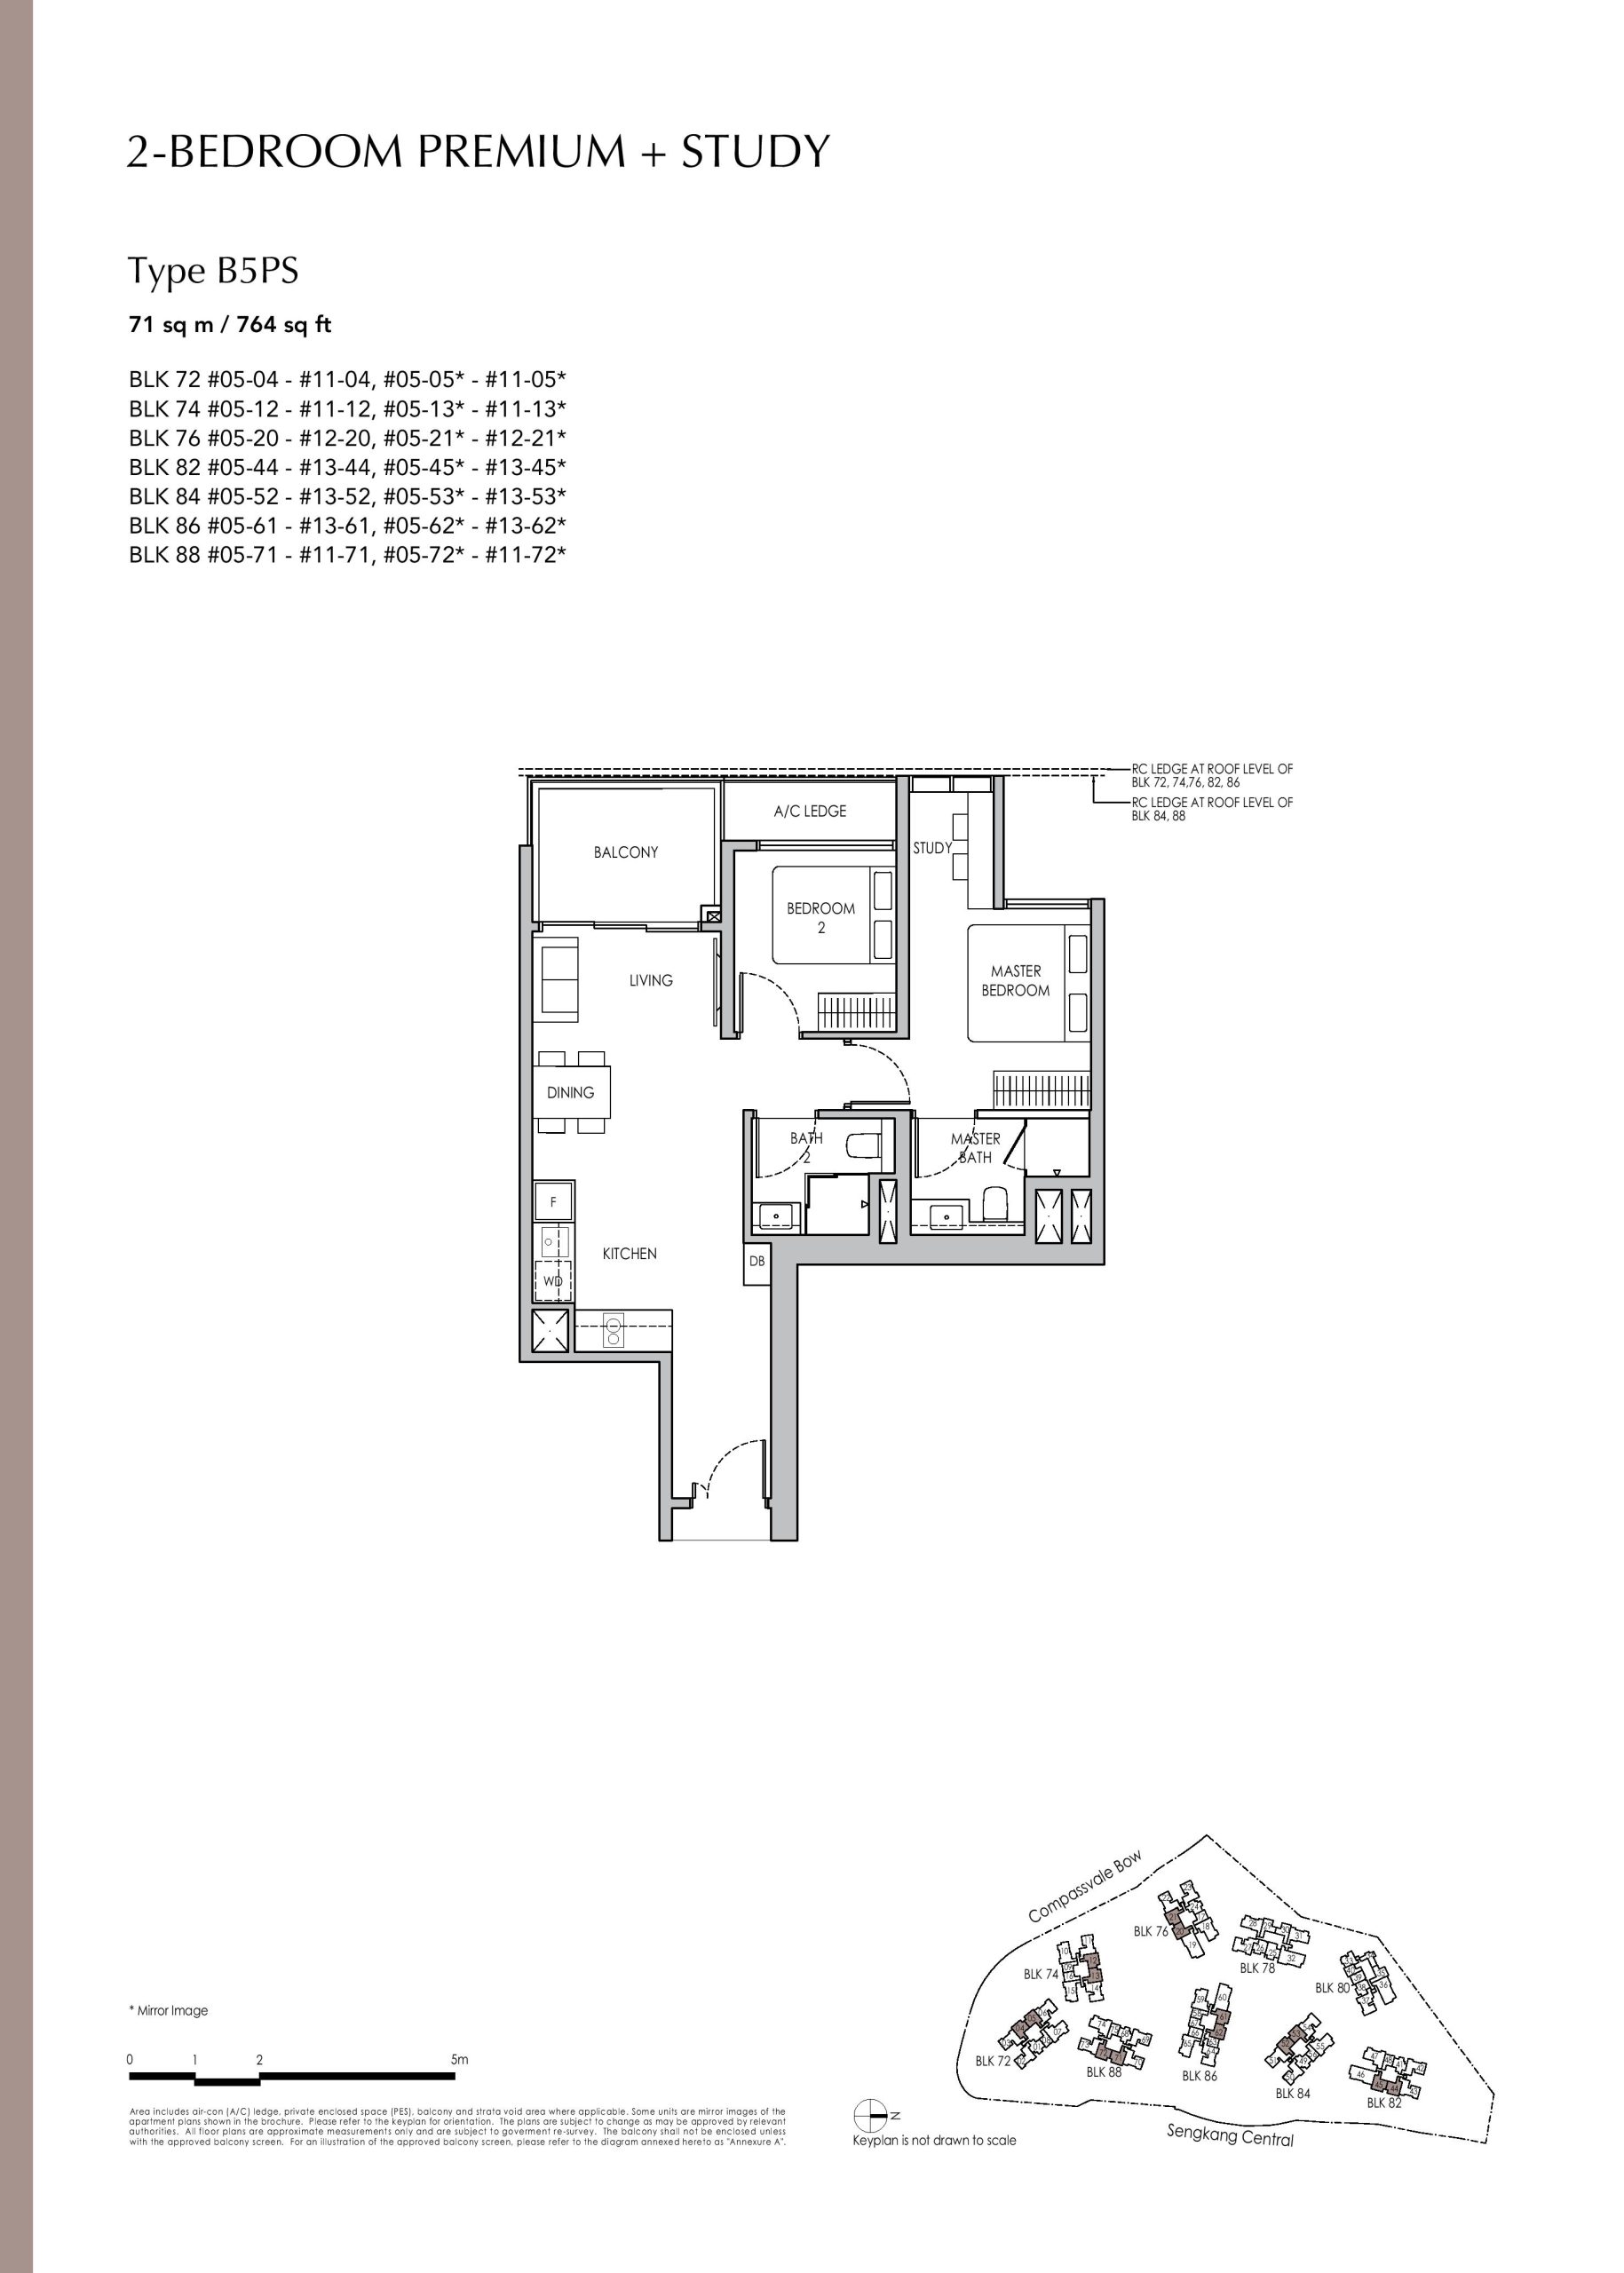 Sengkang Grand Residences 2 Bedroom Premium + Study Type B5PS Floor Plans